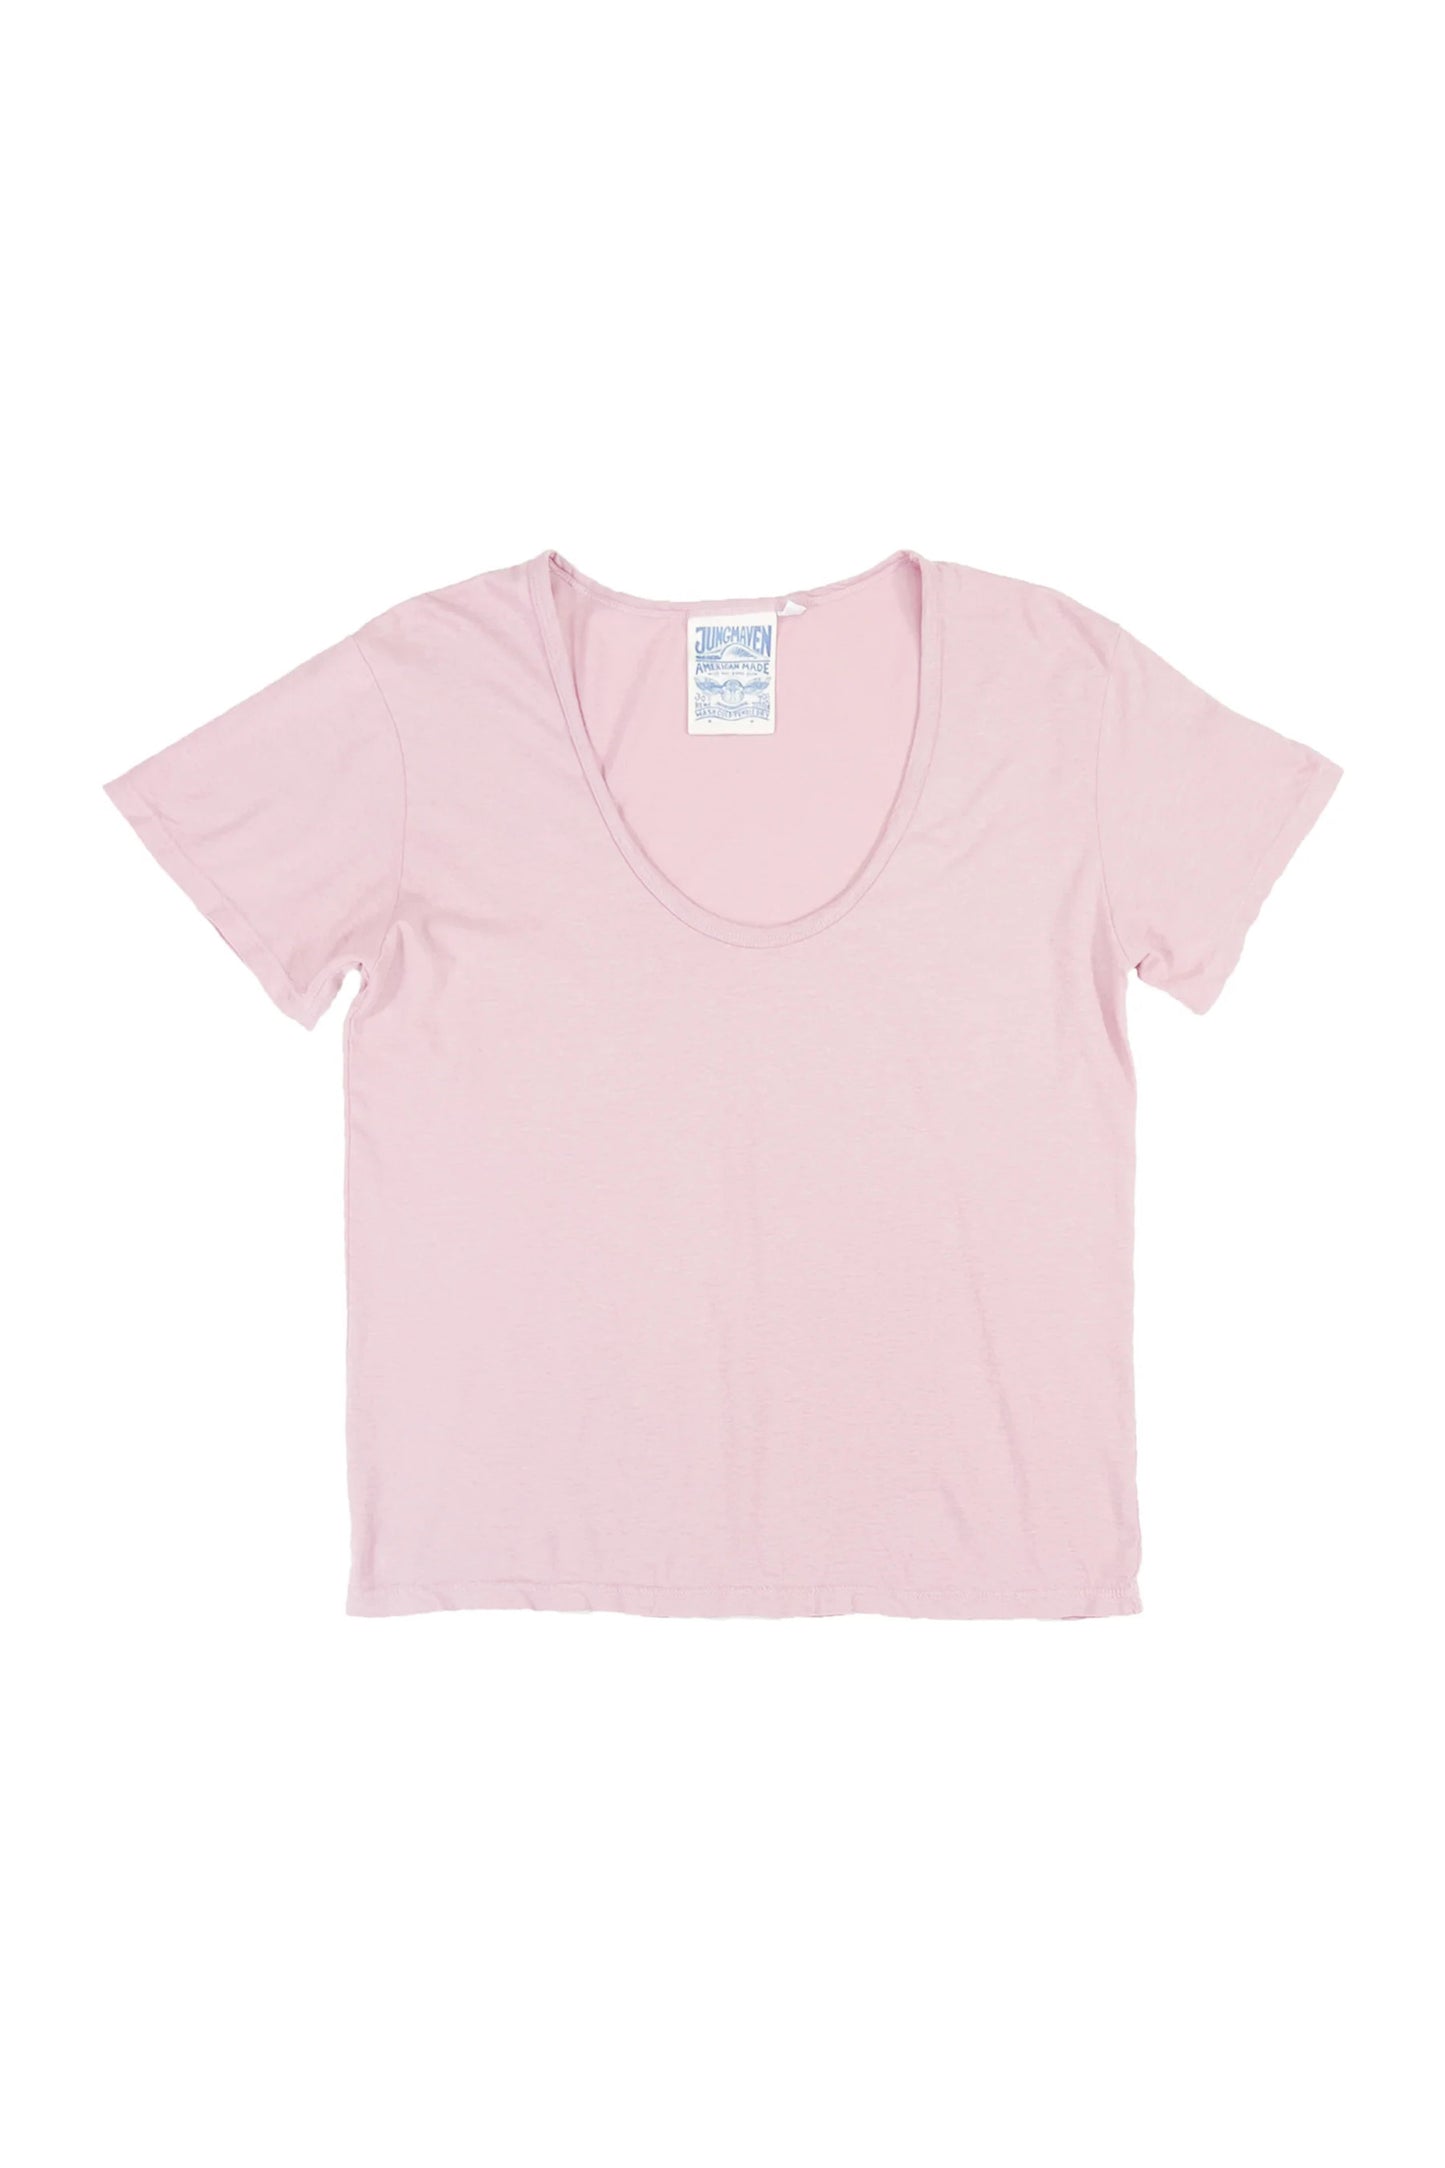 JUNGMAVEN - Sustainable Hemp Clothing - Made in USA - Women's Zuma Scoop Neck Tee - Organic Cotton Hemp Jersey - Rose Quartz - Summer T-Shirts